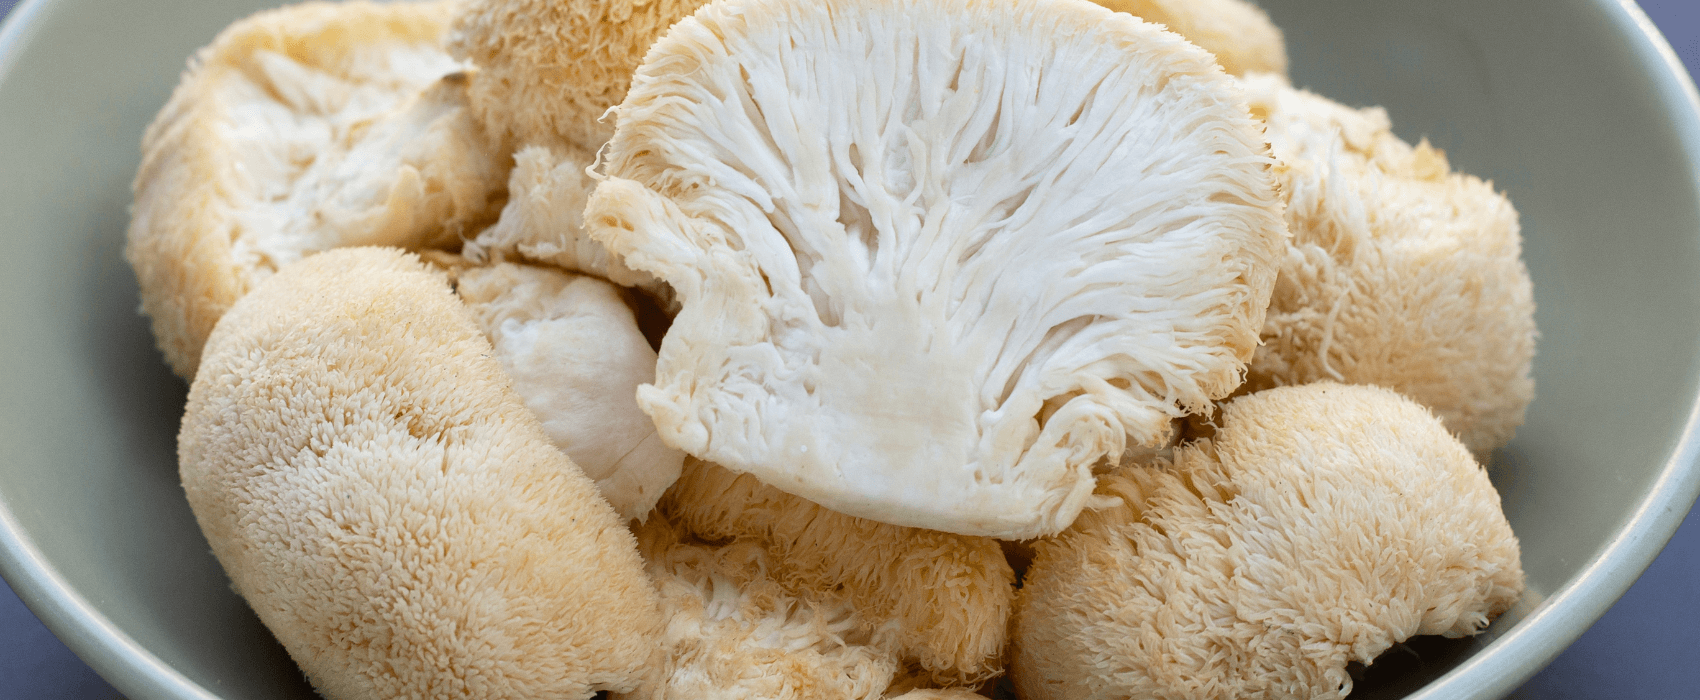 Blog - Why lion's mane mushrooms are taking Austra